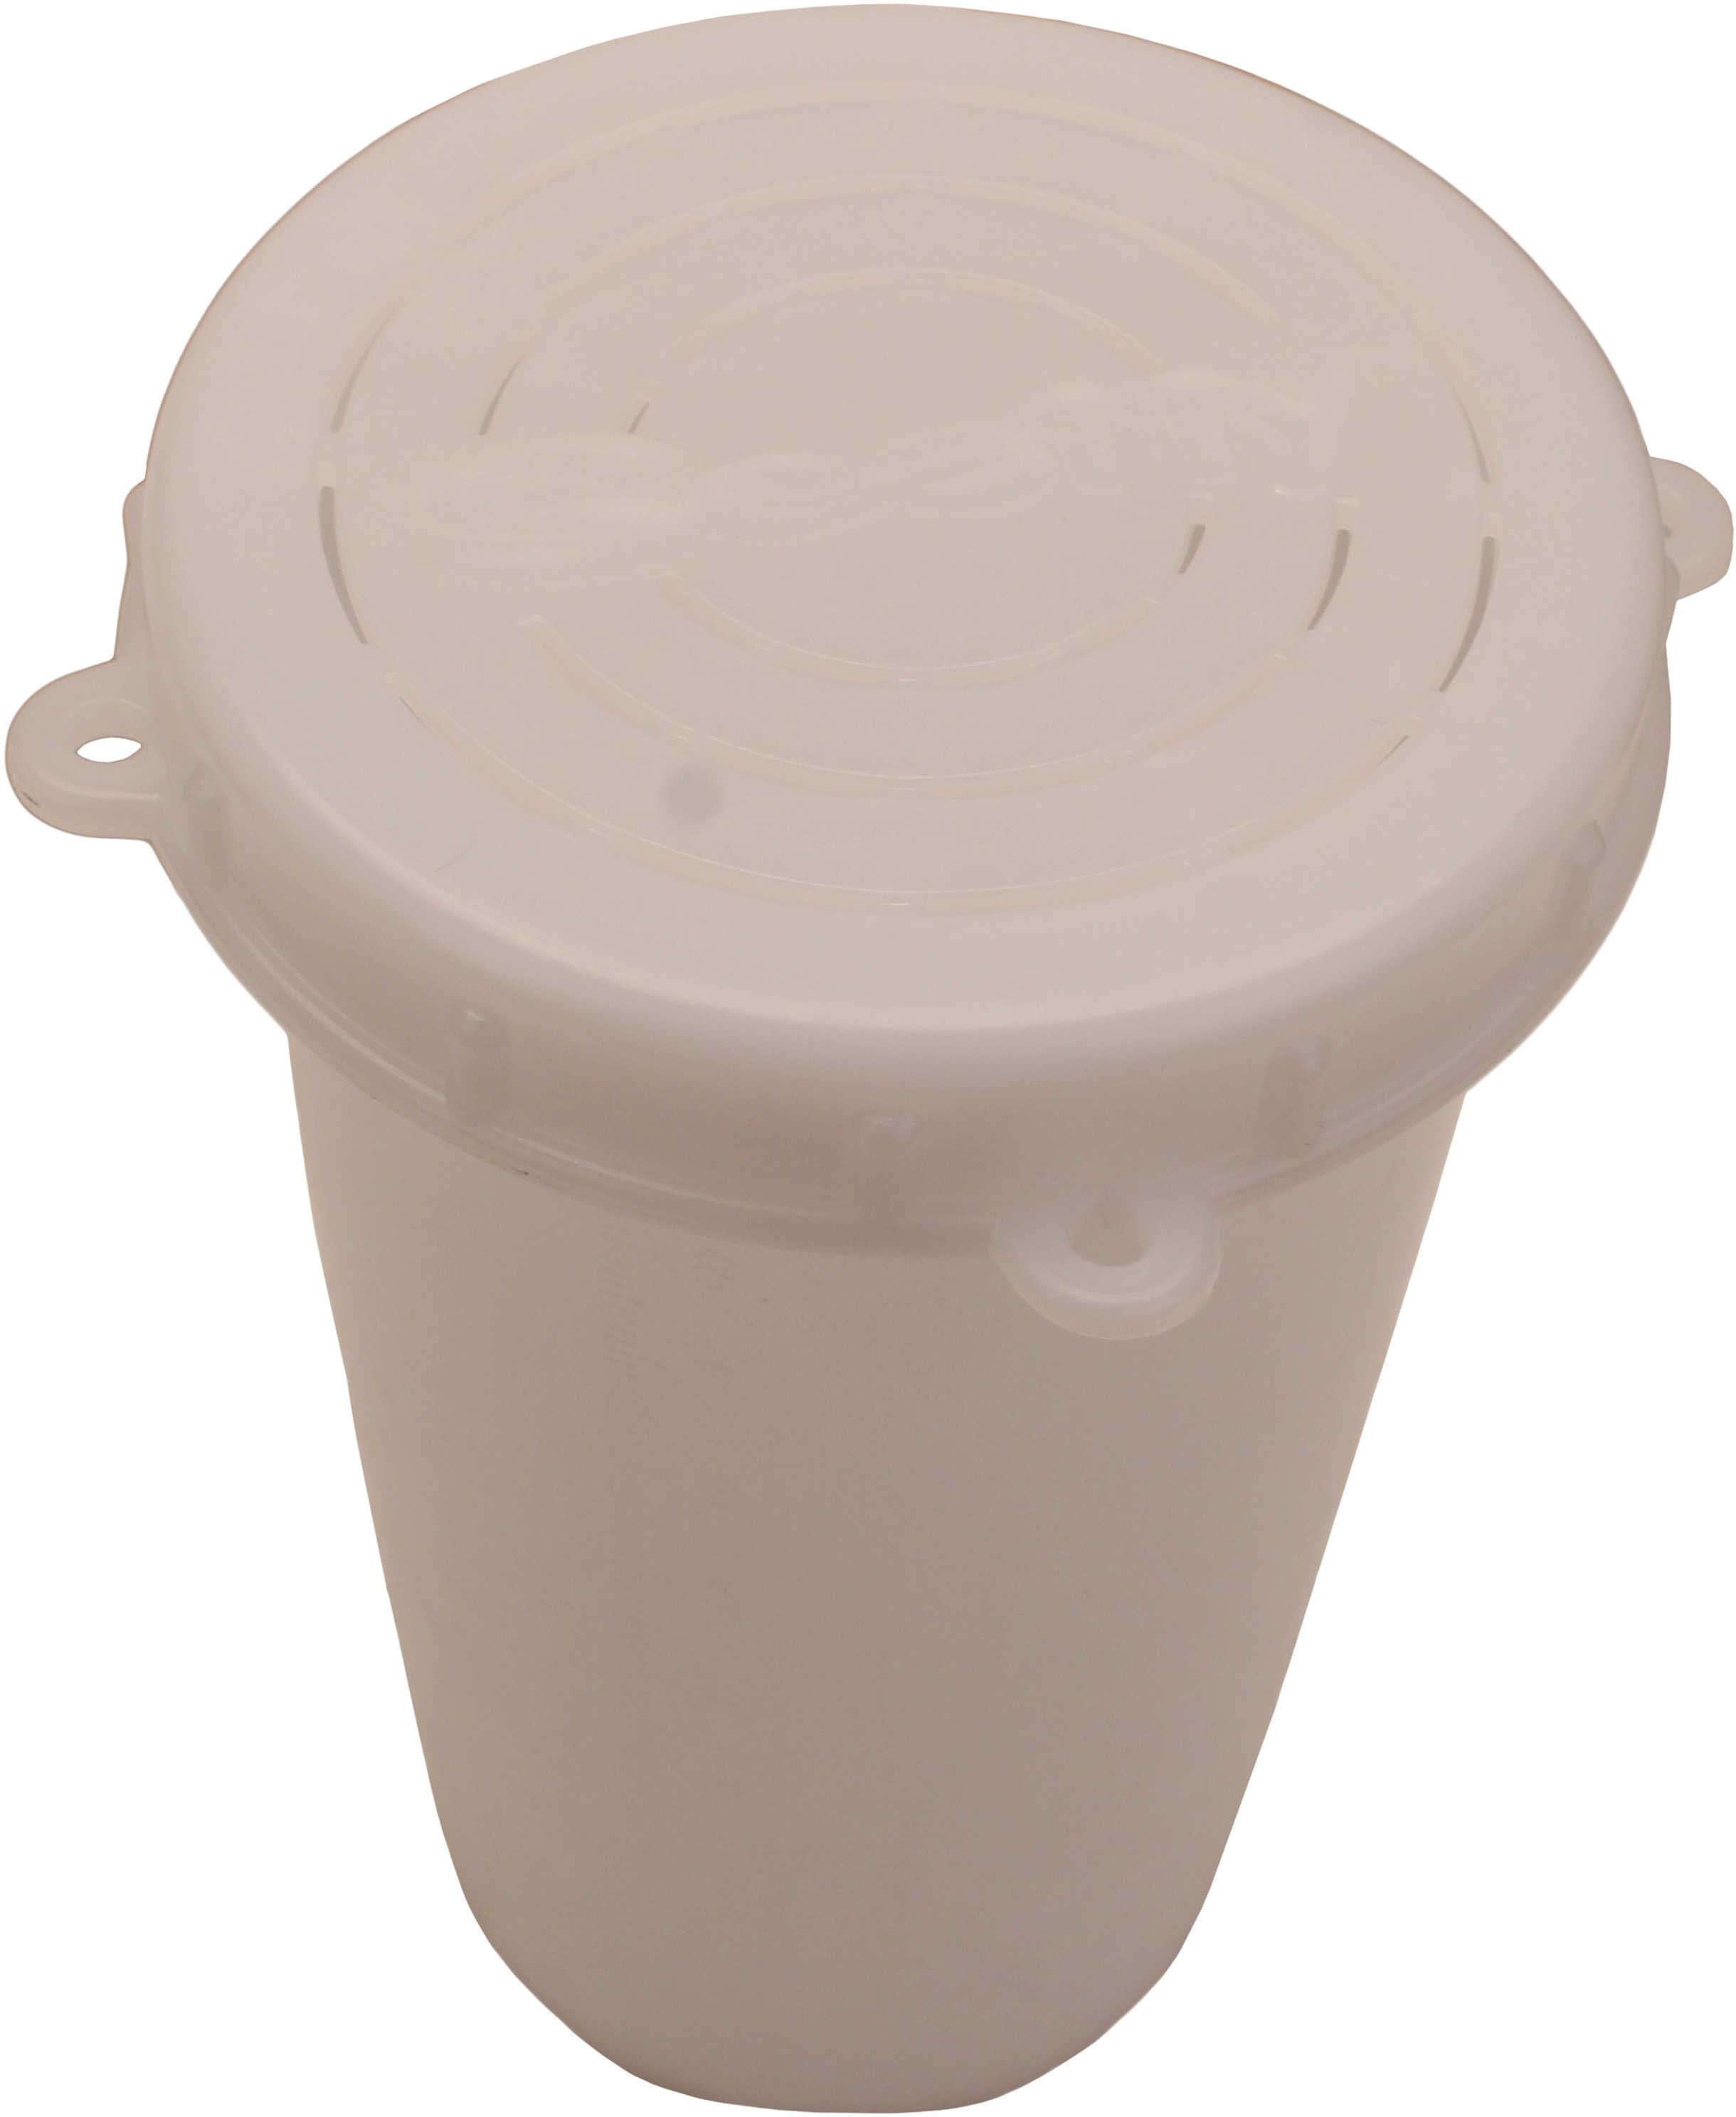 Scotty Crab Diner Bait Jar with Lid 1 Liter, White Md: 0651